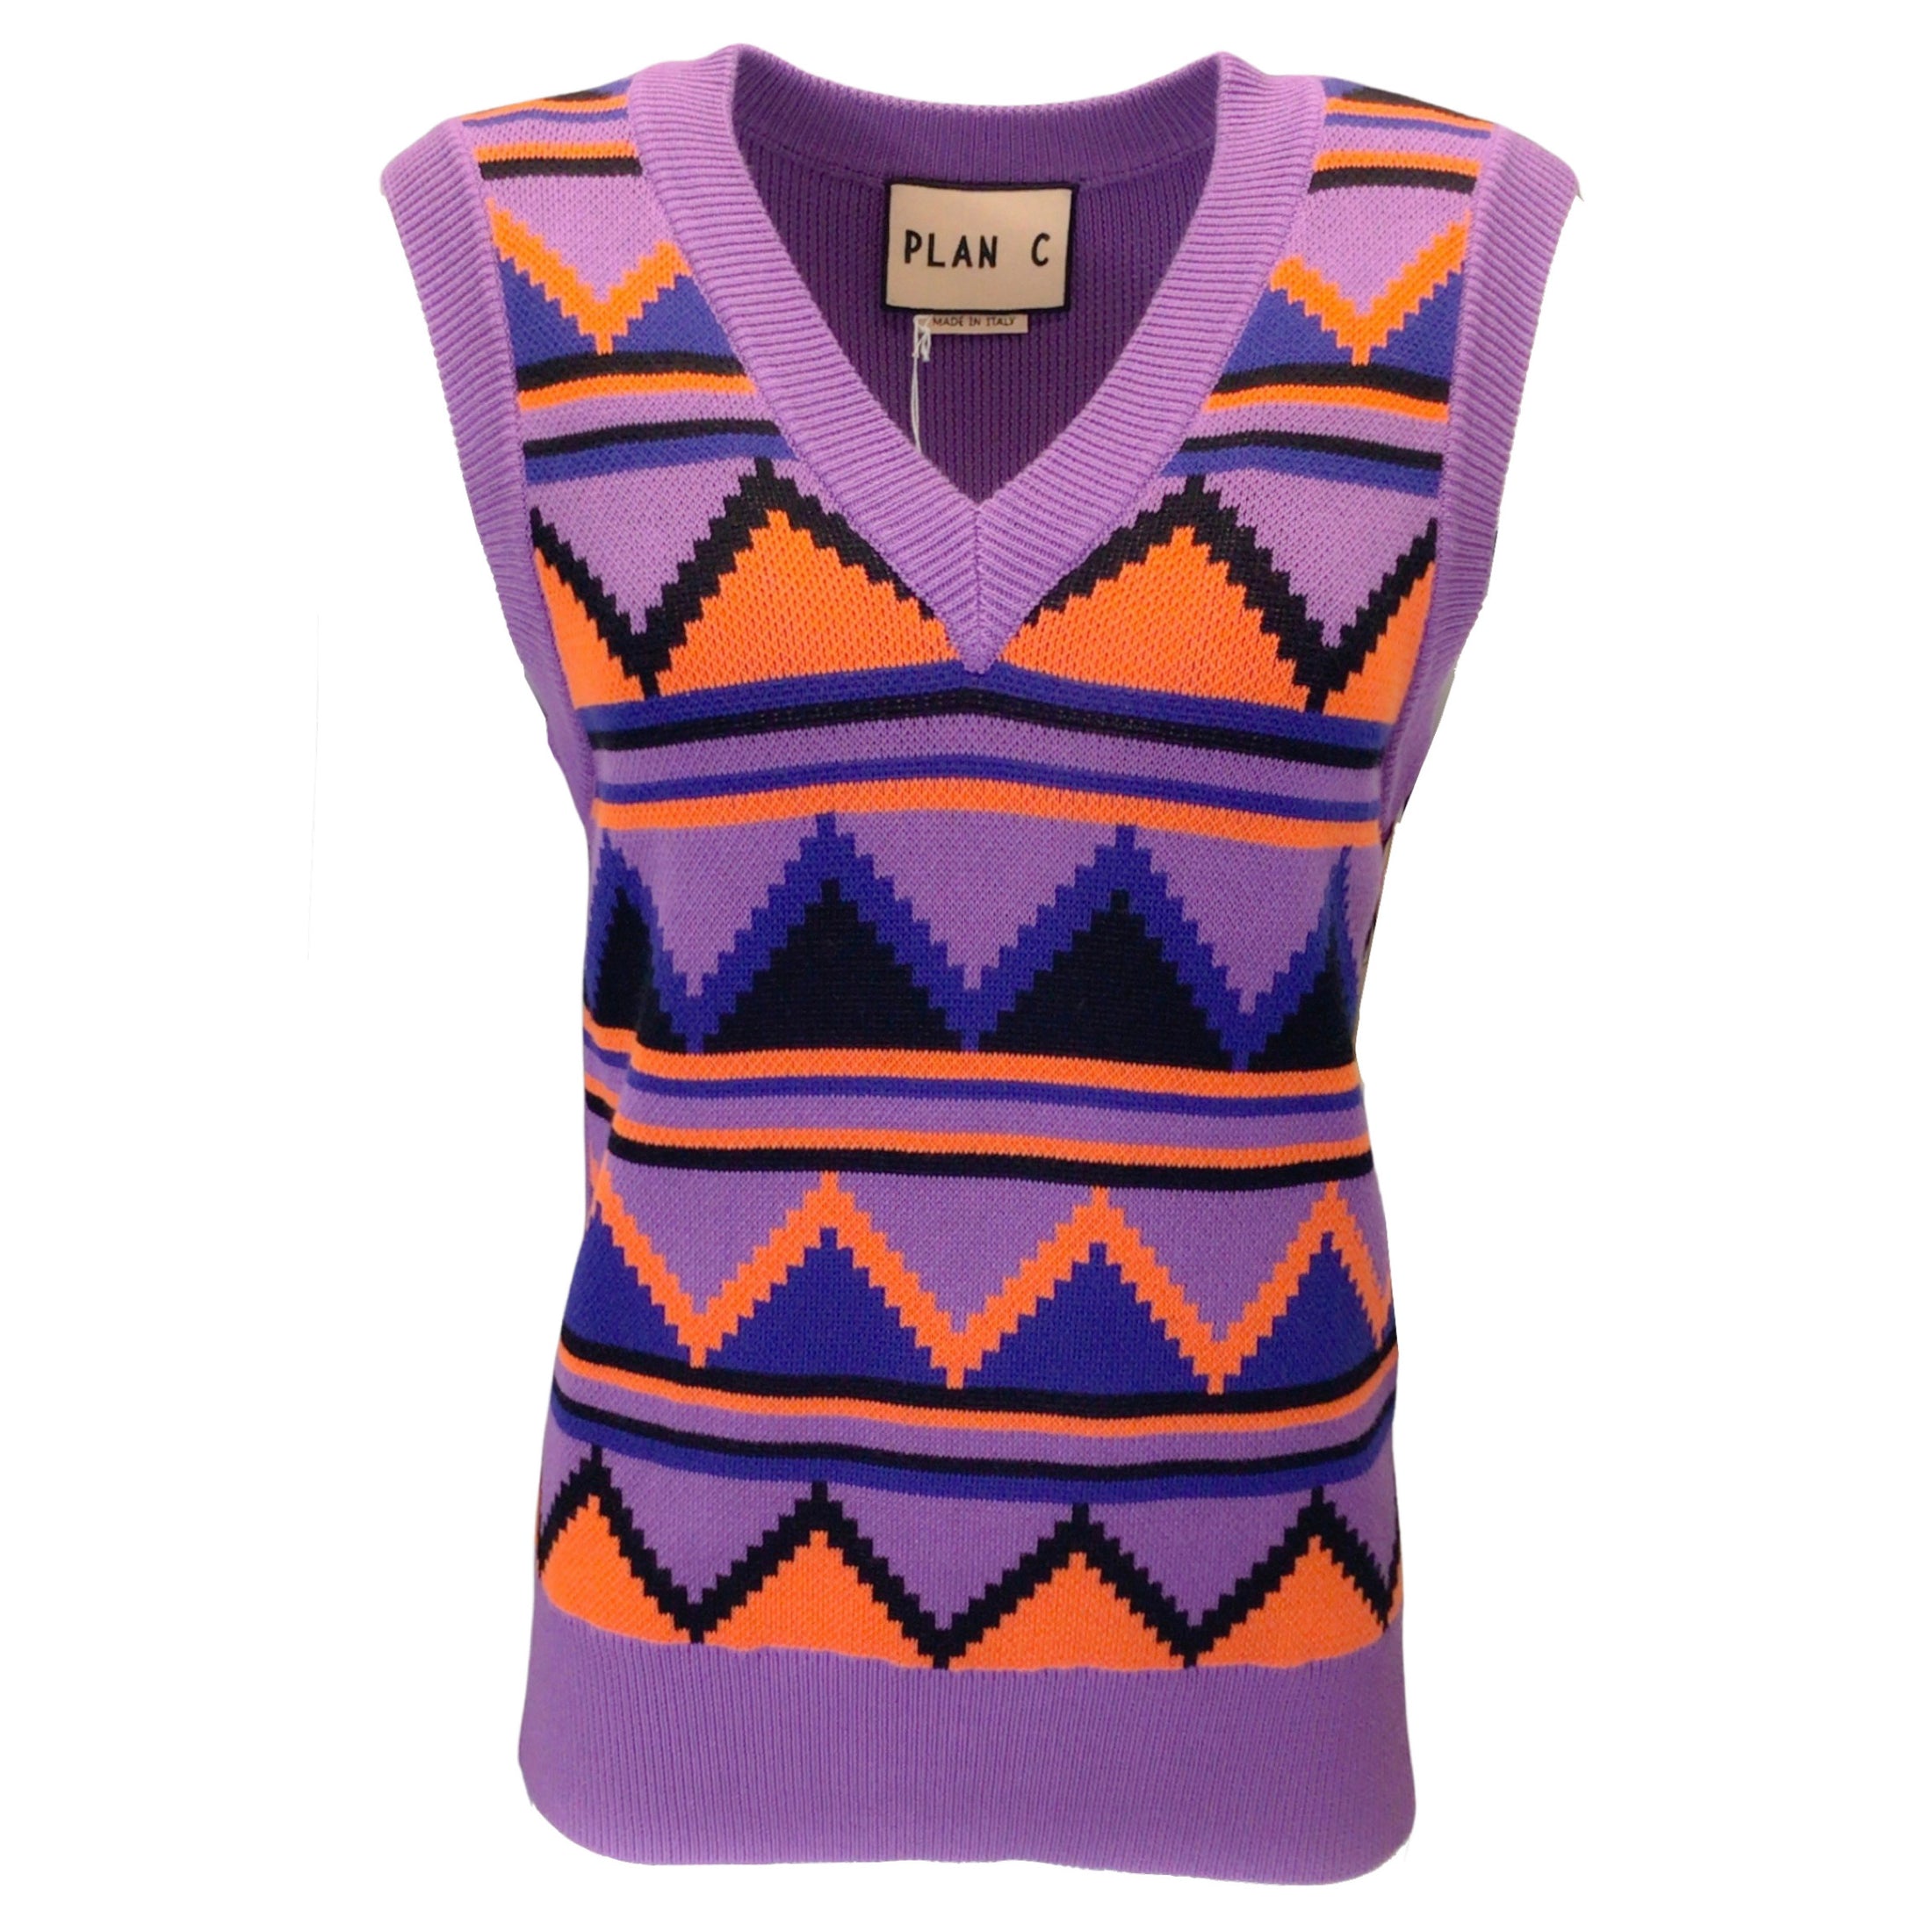 Plan C Purple / Orange Multi Patterned Knit Sleeveless V-Neck Cotton Knit Sweater